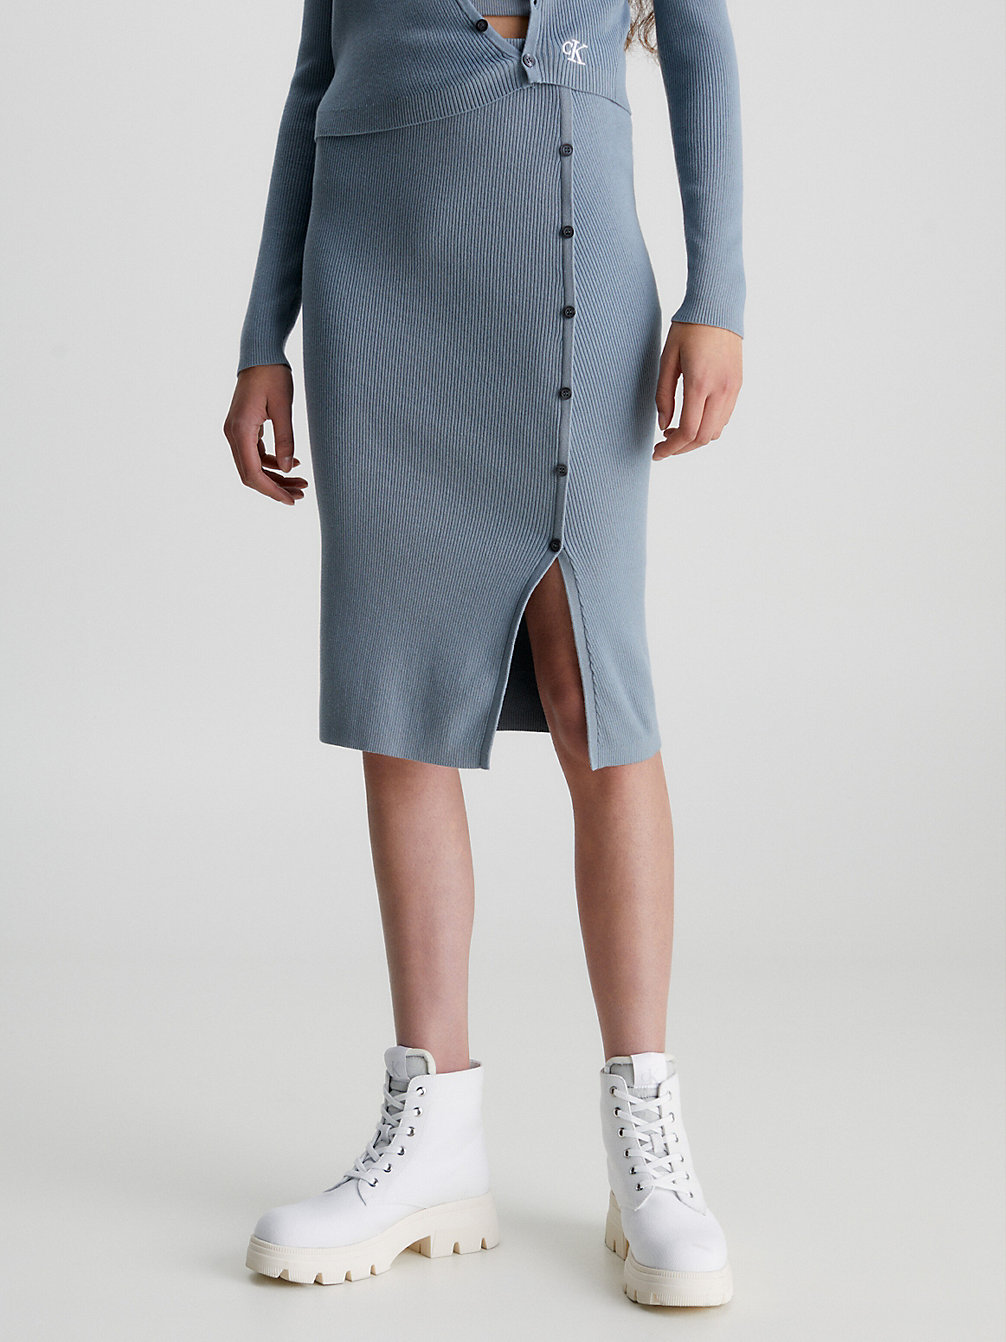 OVERCAST GREY > Organic Cotton Pencil Skirt > undefined Женщины - Calvin Klein